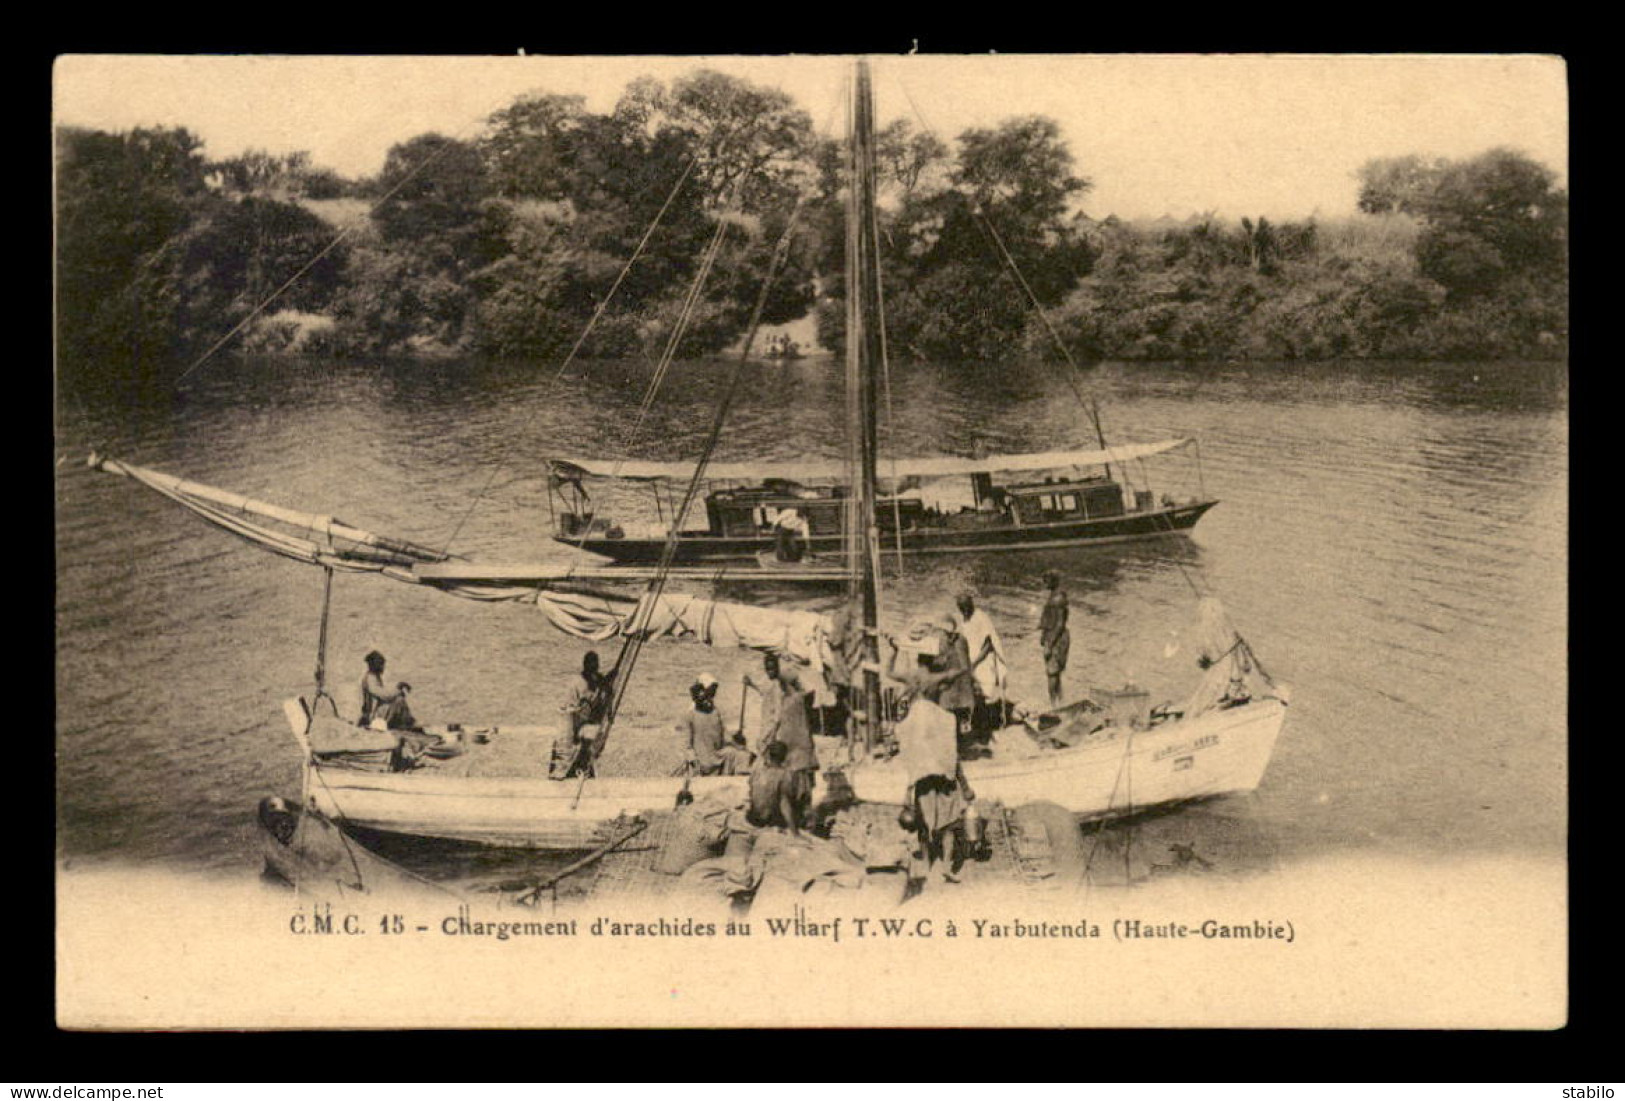 GAMBIE - CHARGEMENT D'ARACHIDES AU WHARF T.W.C. A YARBUTENDA - VOIR ETAT - Gambia